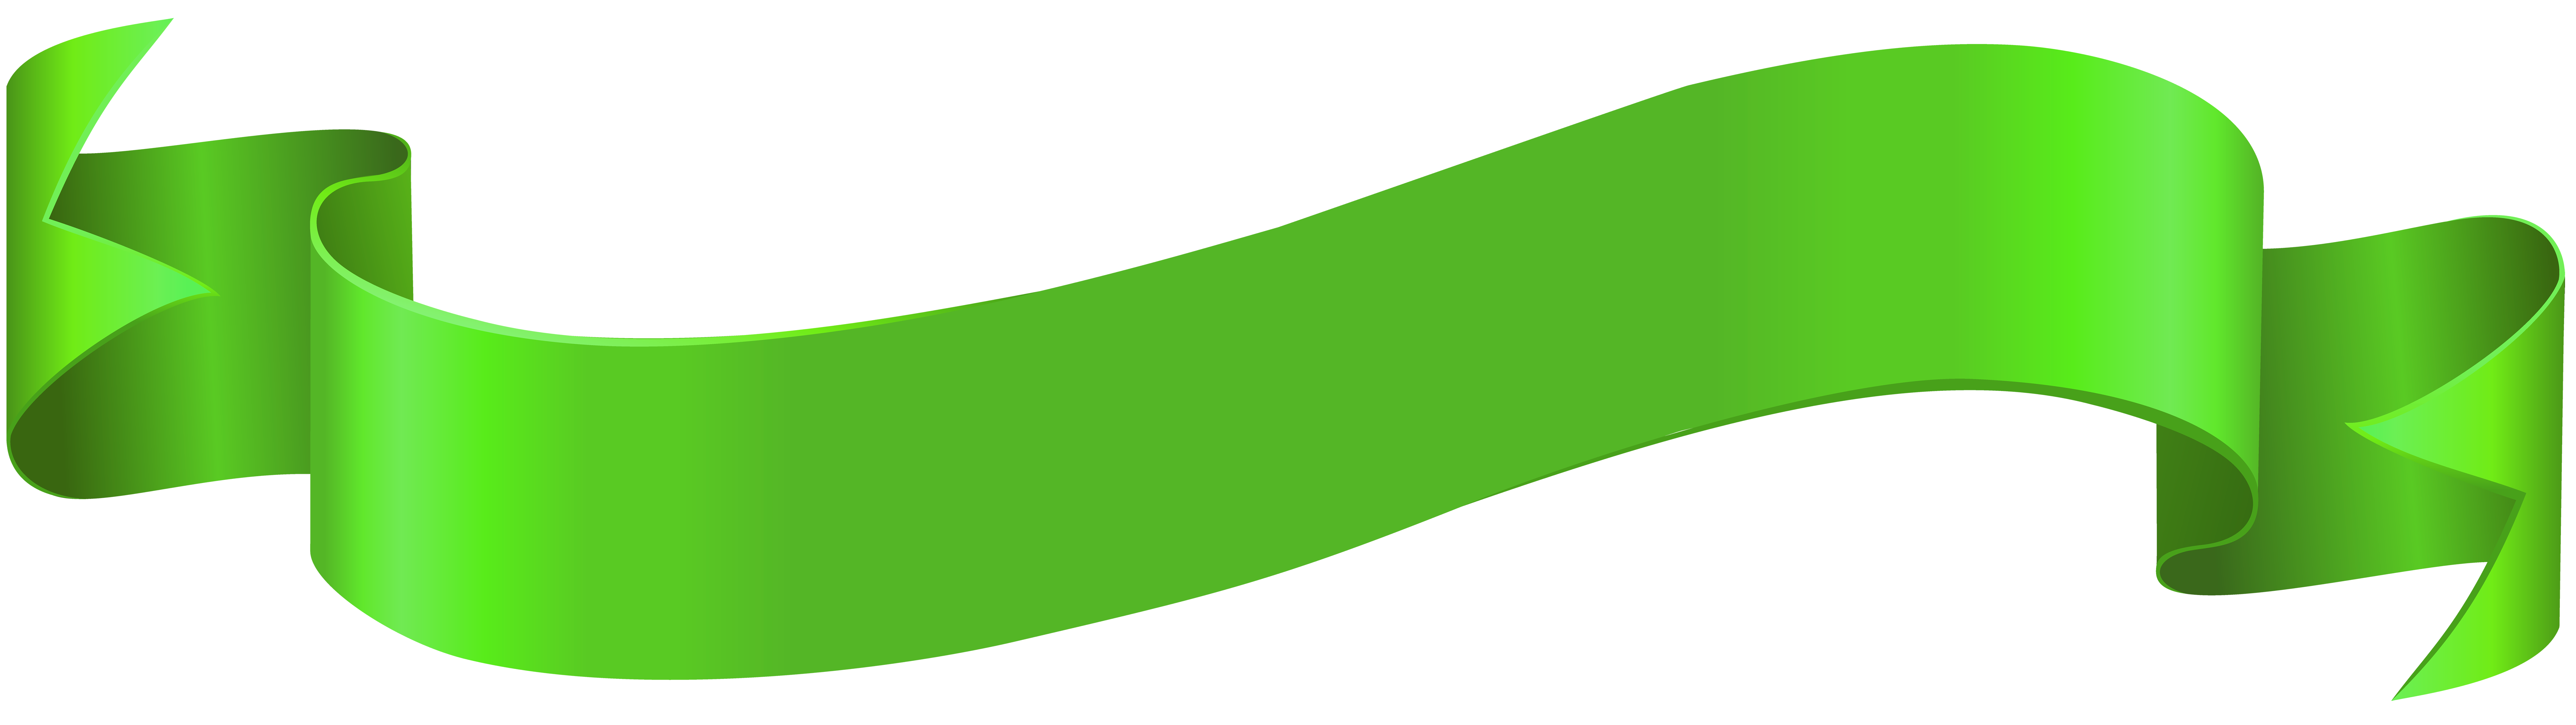 Green banner clip.